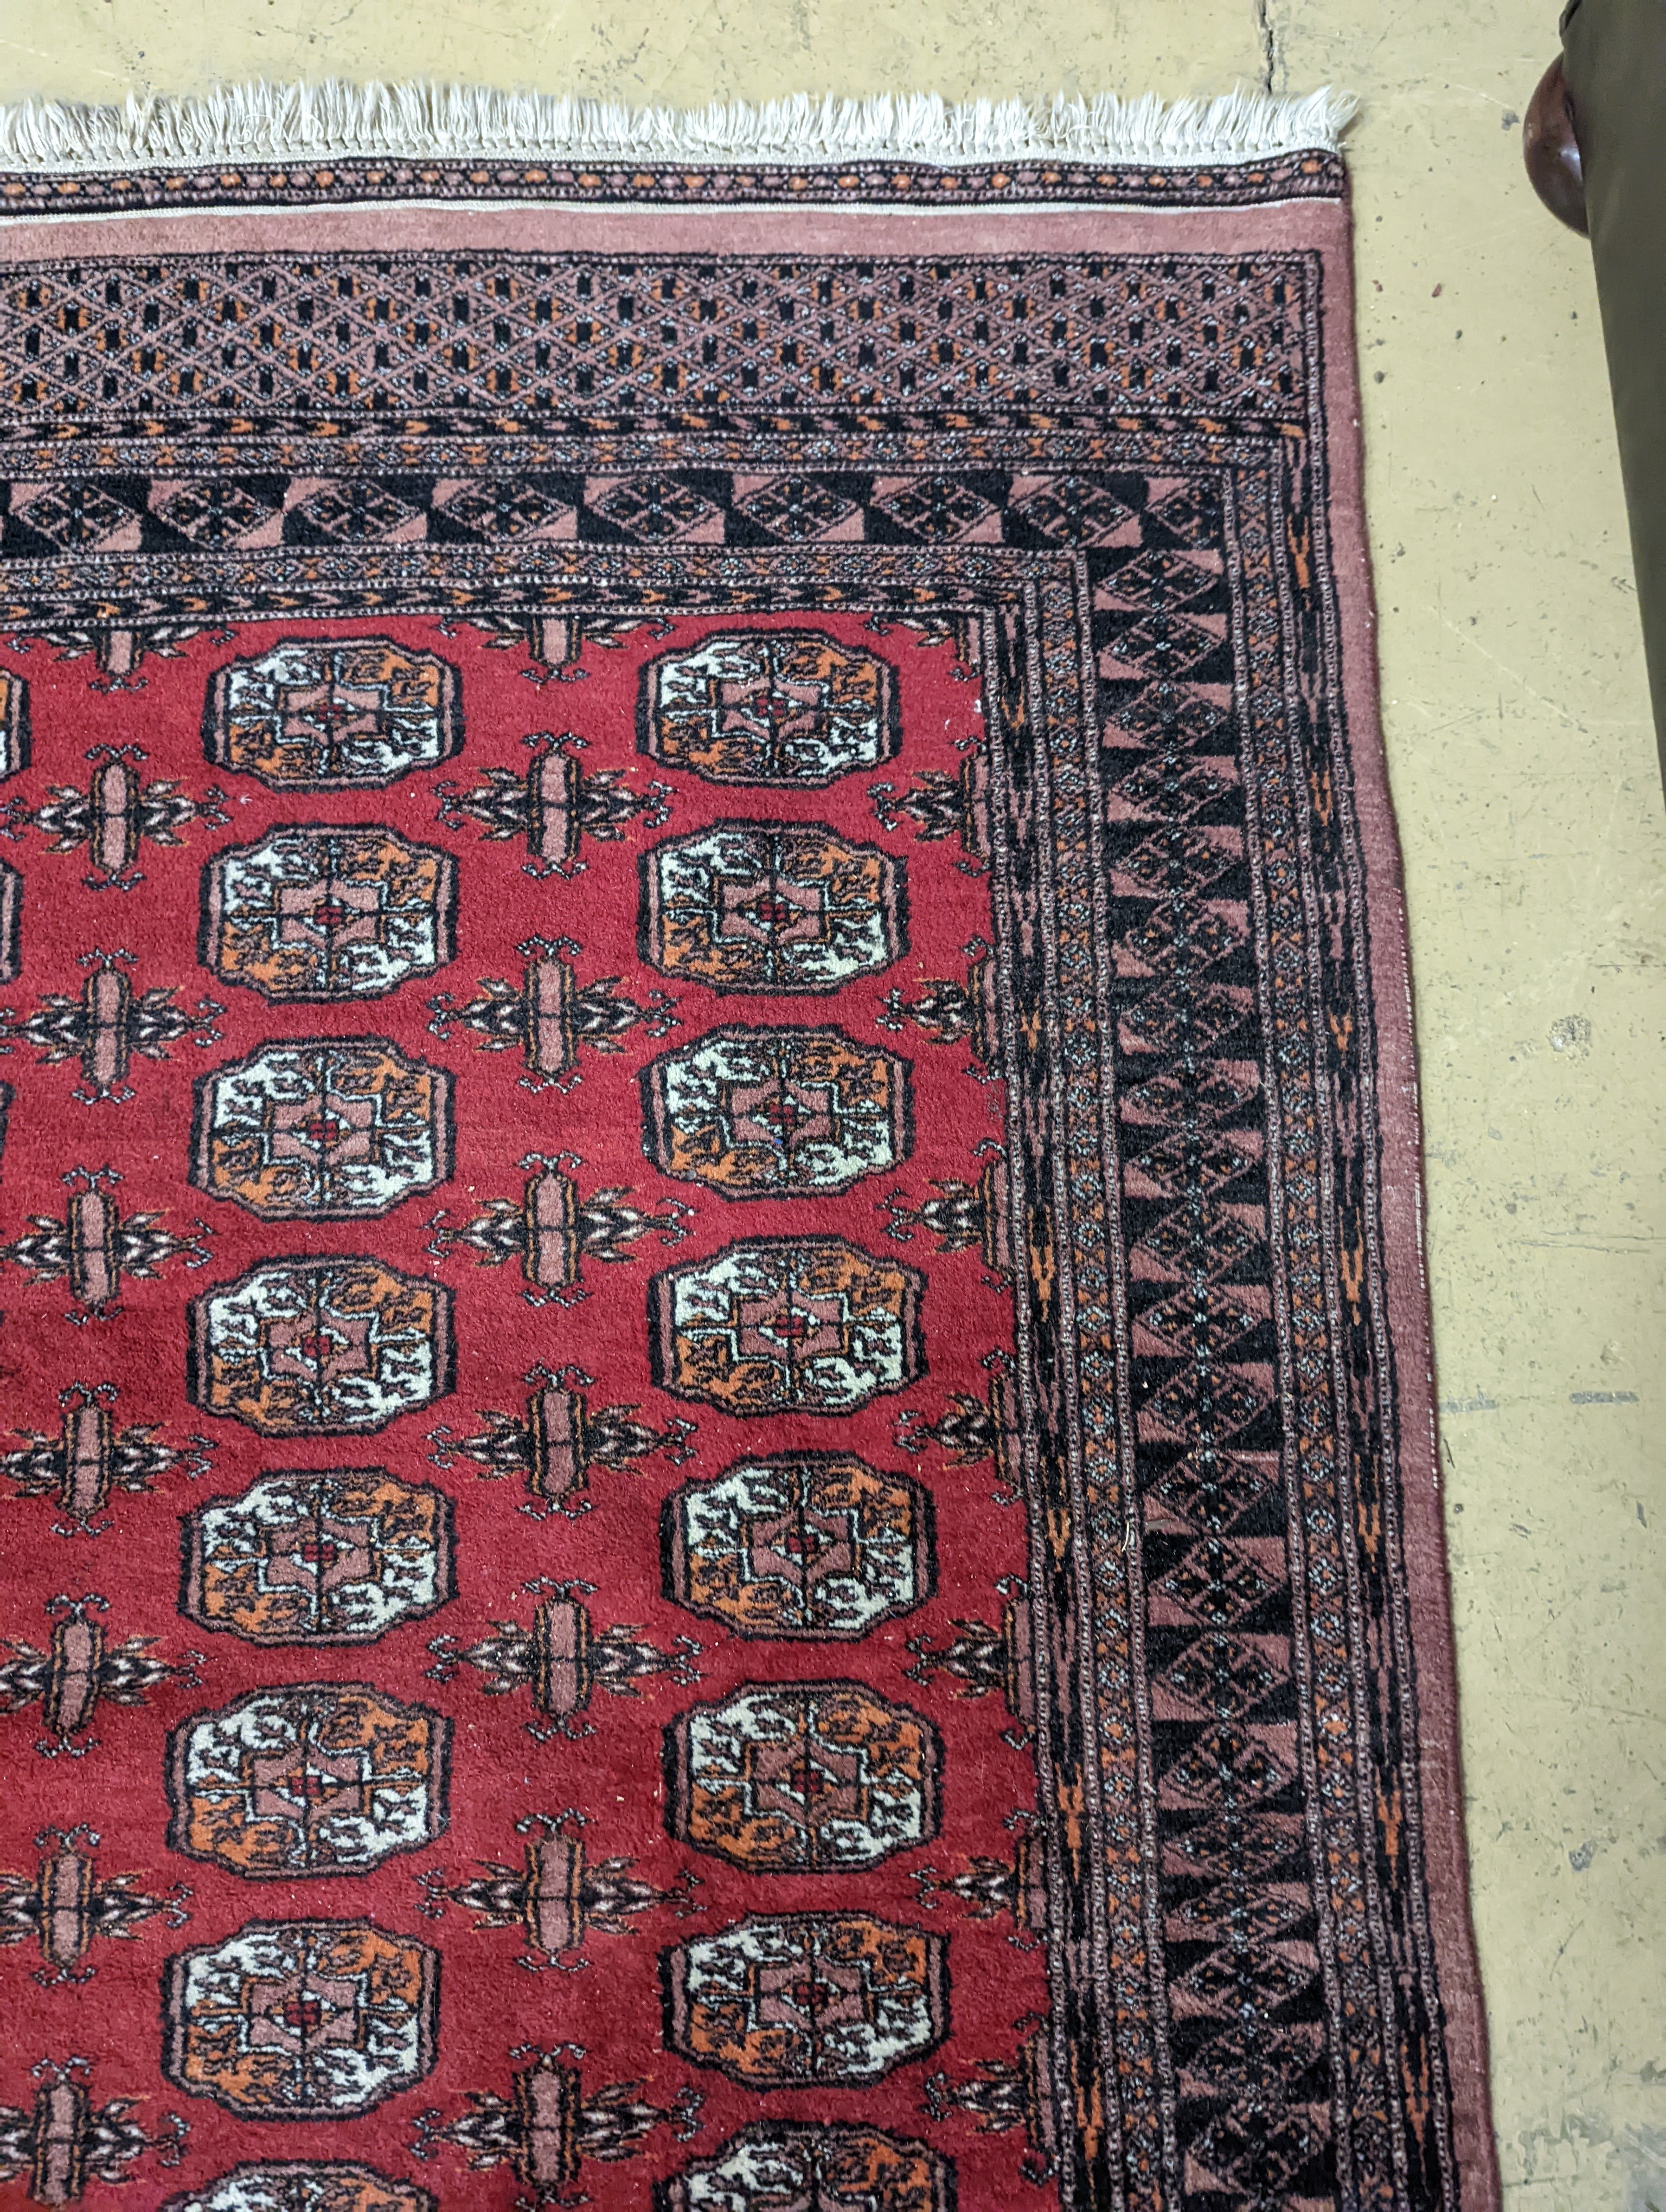 A Bokhara red ground rug, 196 x 126cm